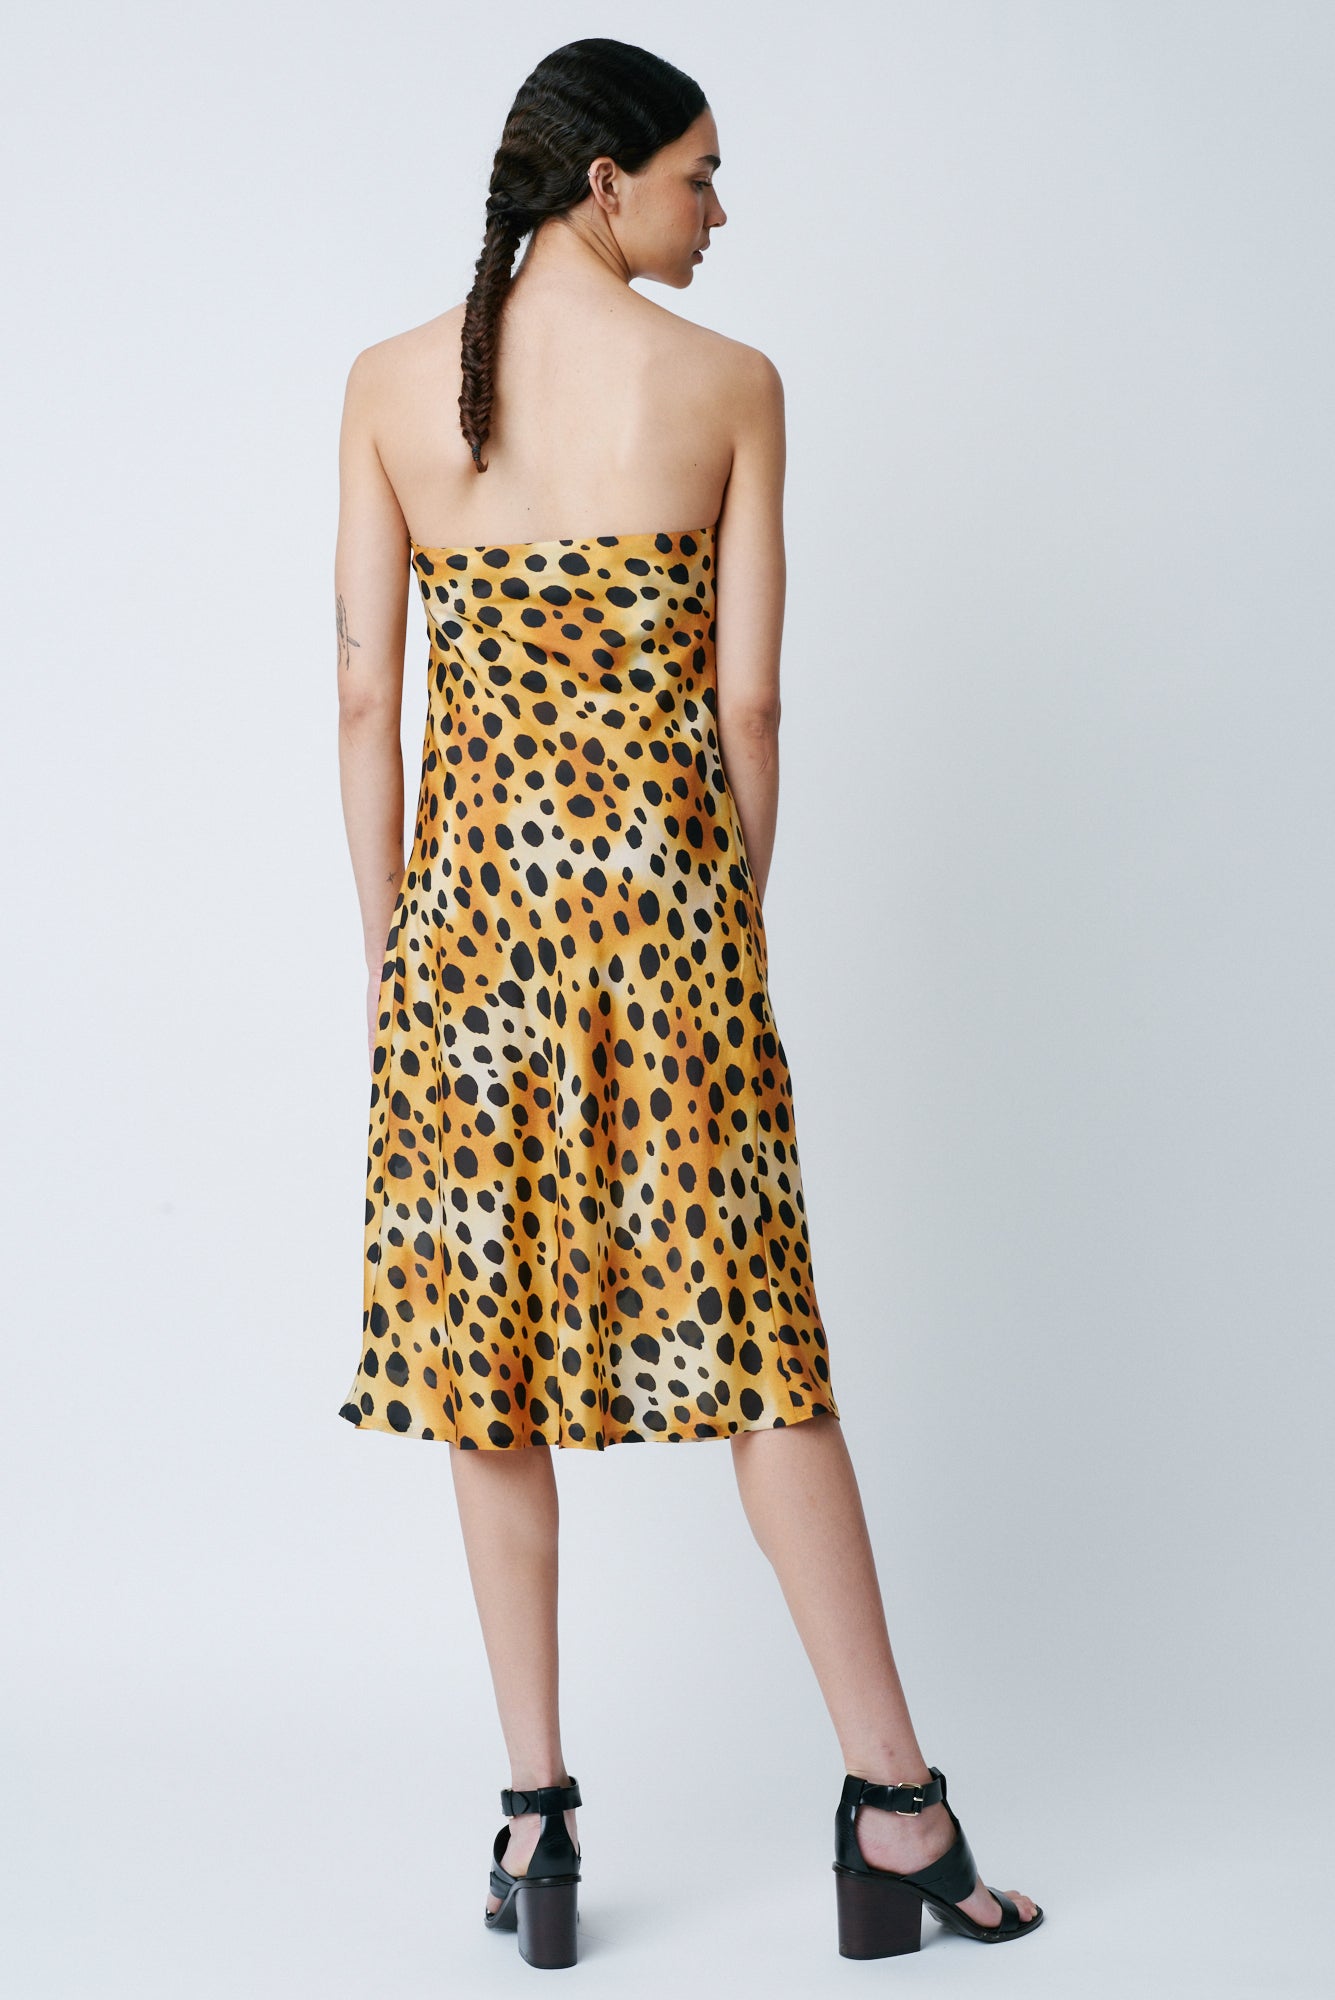 Classic Cheetah Vintage Wash Print Silk Draped Tie Dress Full Back View